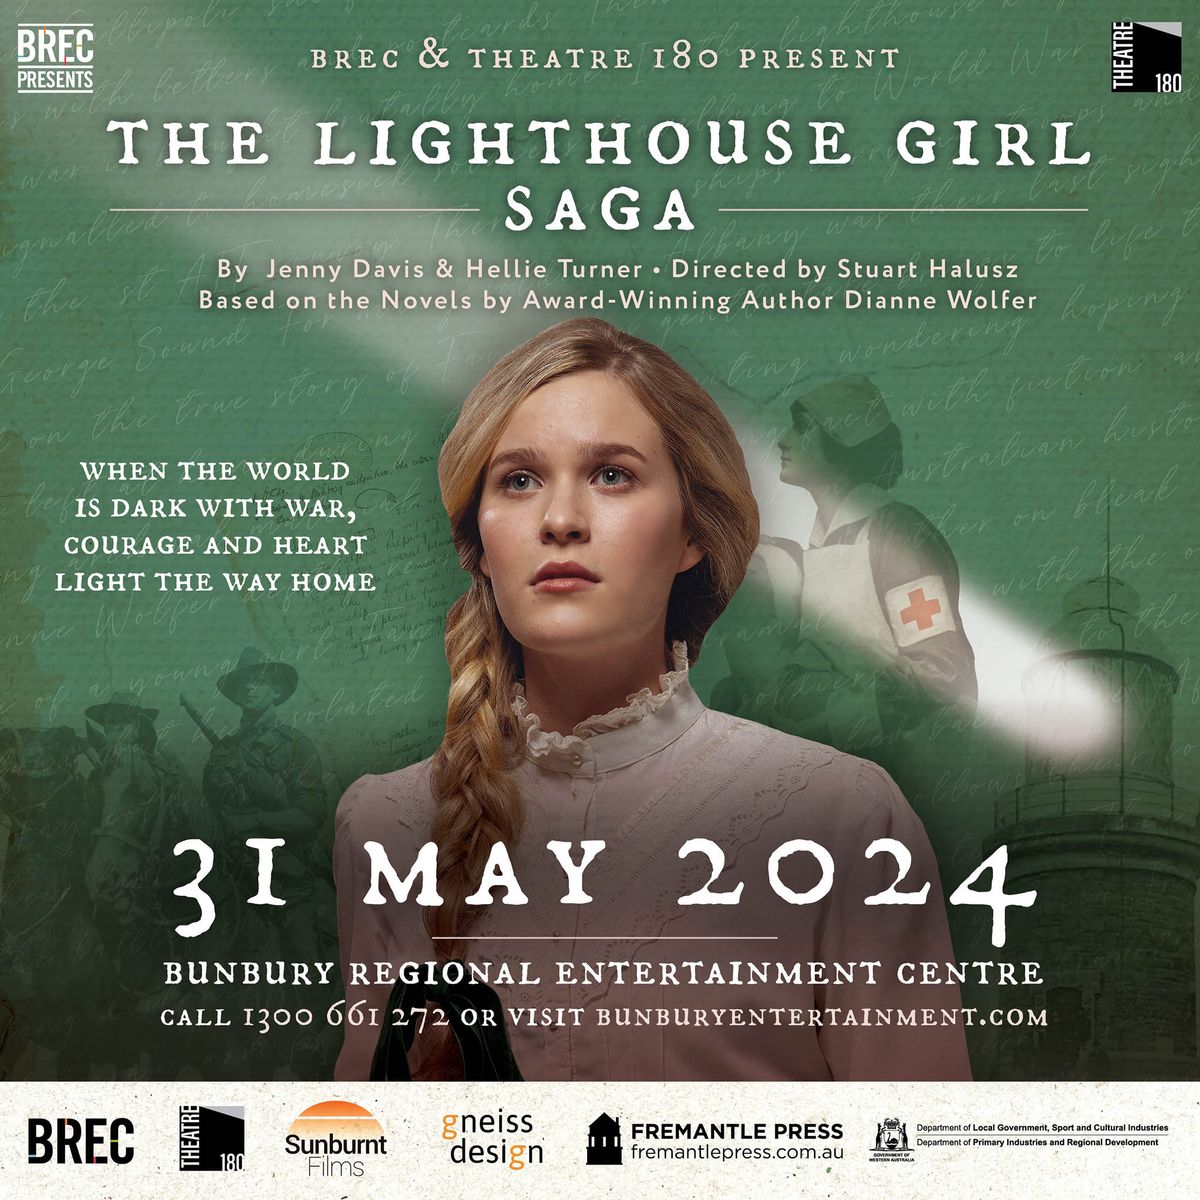 The Anchormen and the Lighthouse Girl Saga